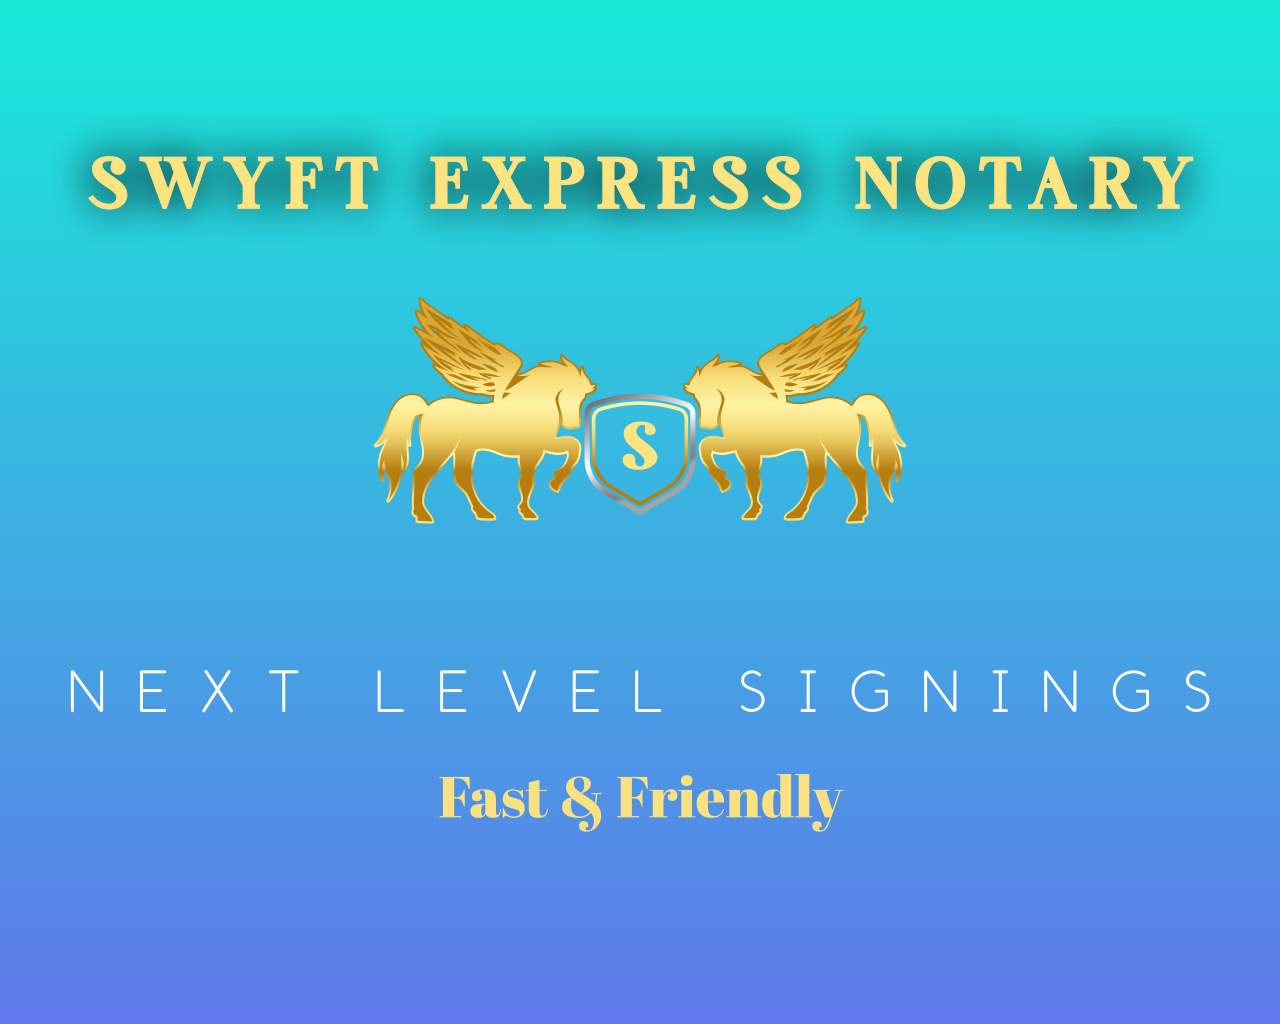 Swyft Express Notary 's logo